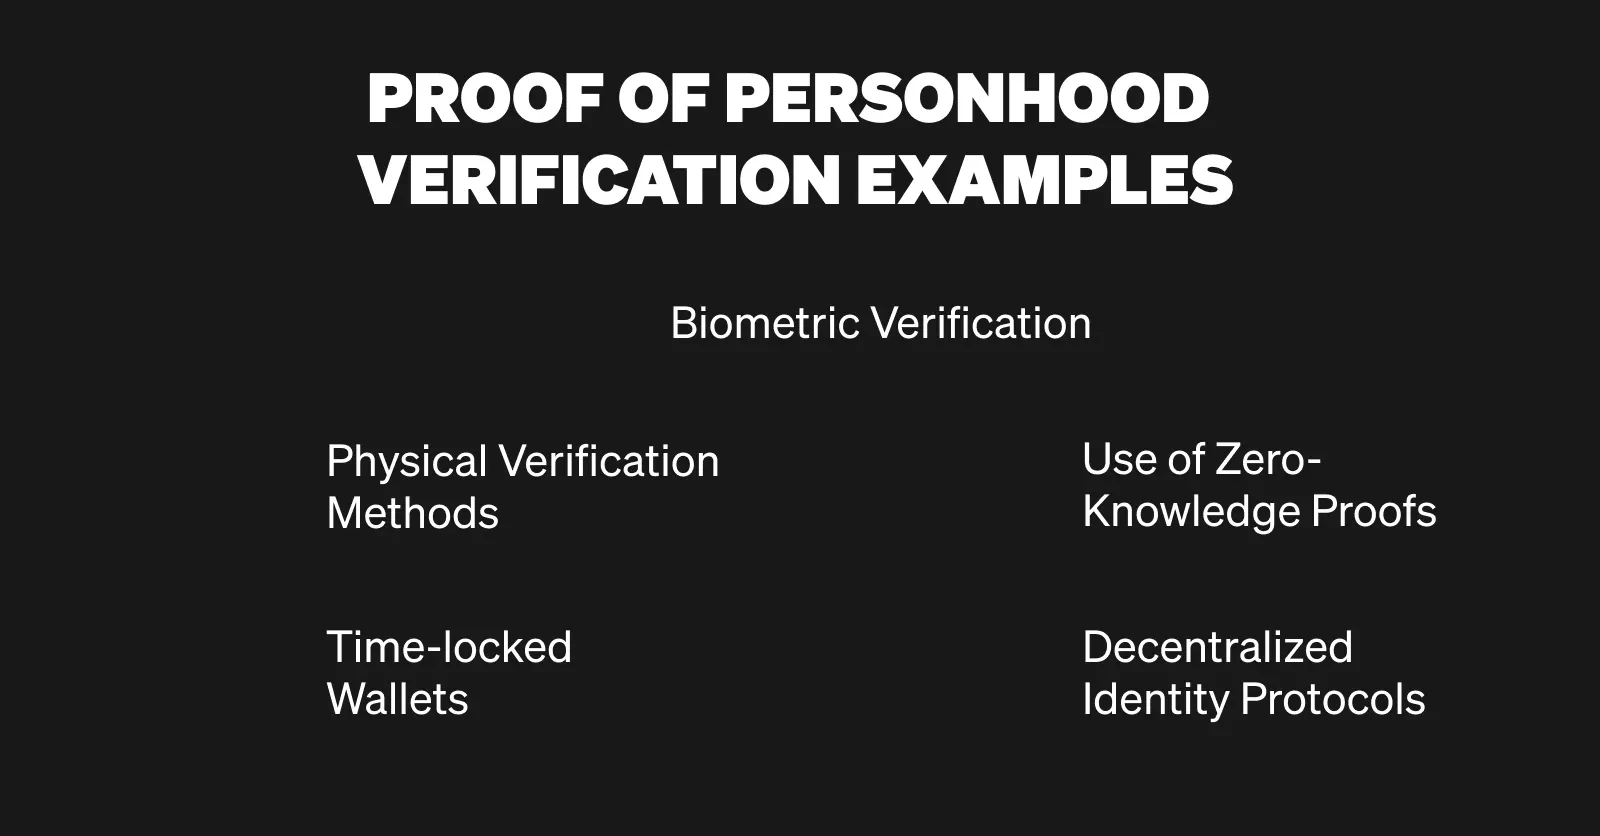 PoP verification examples